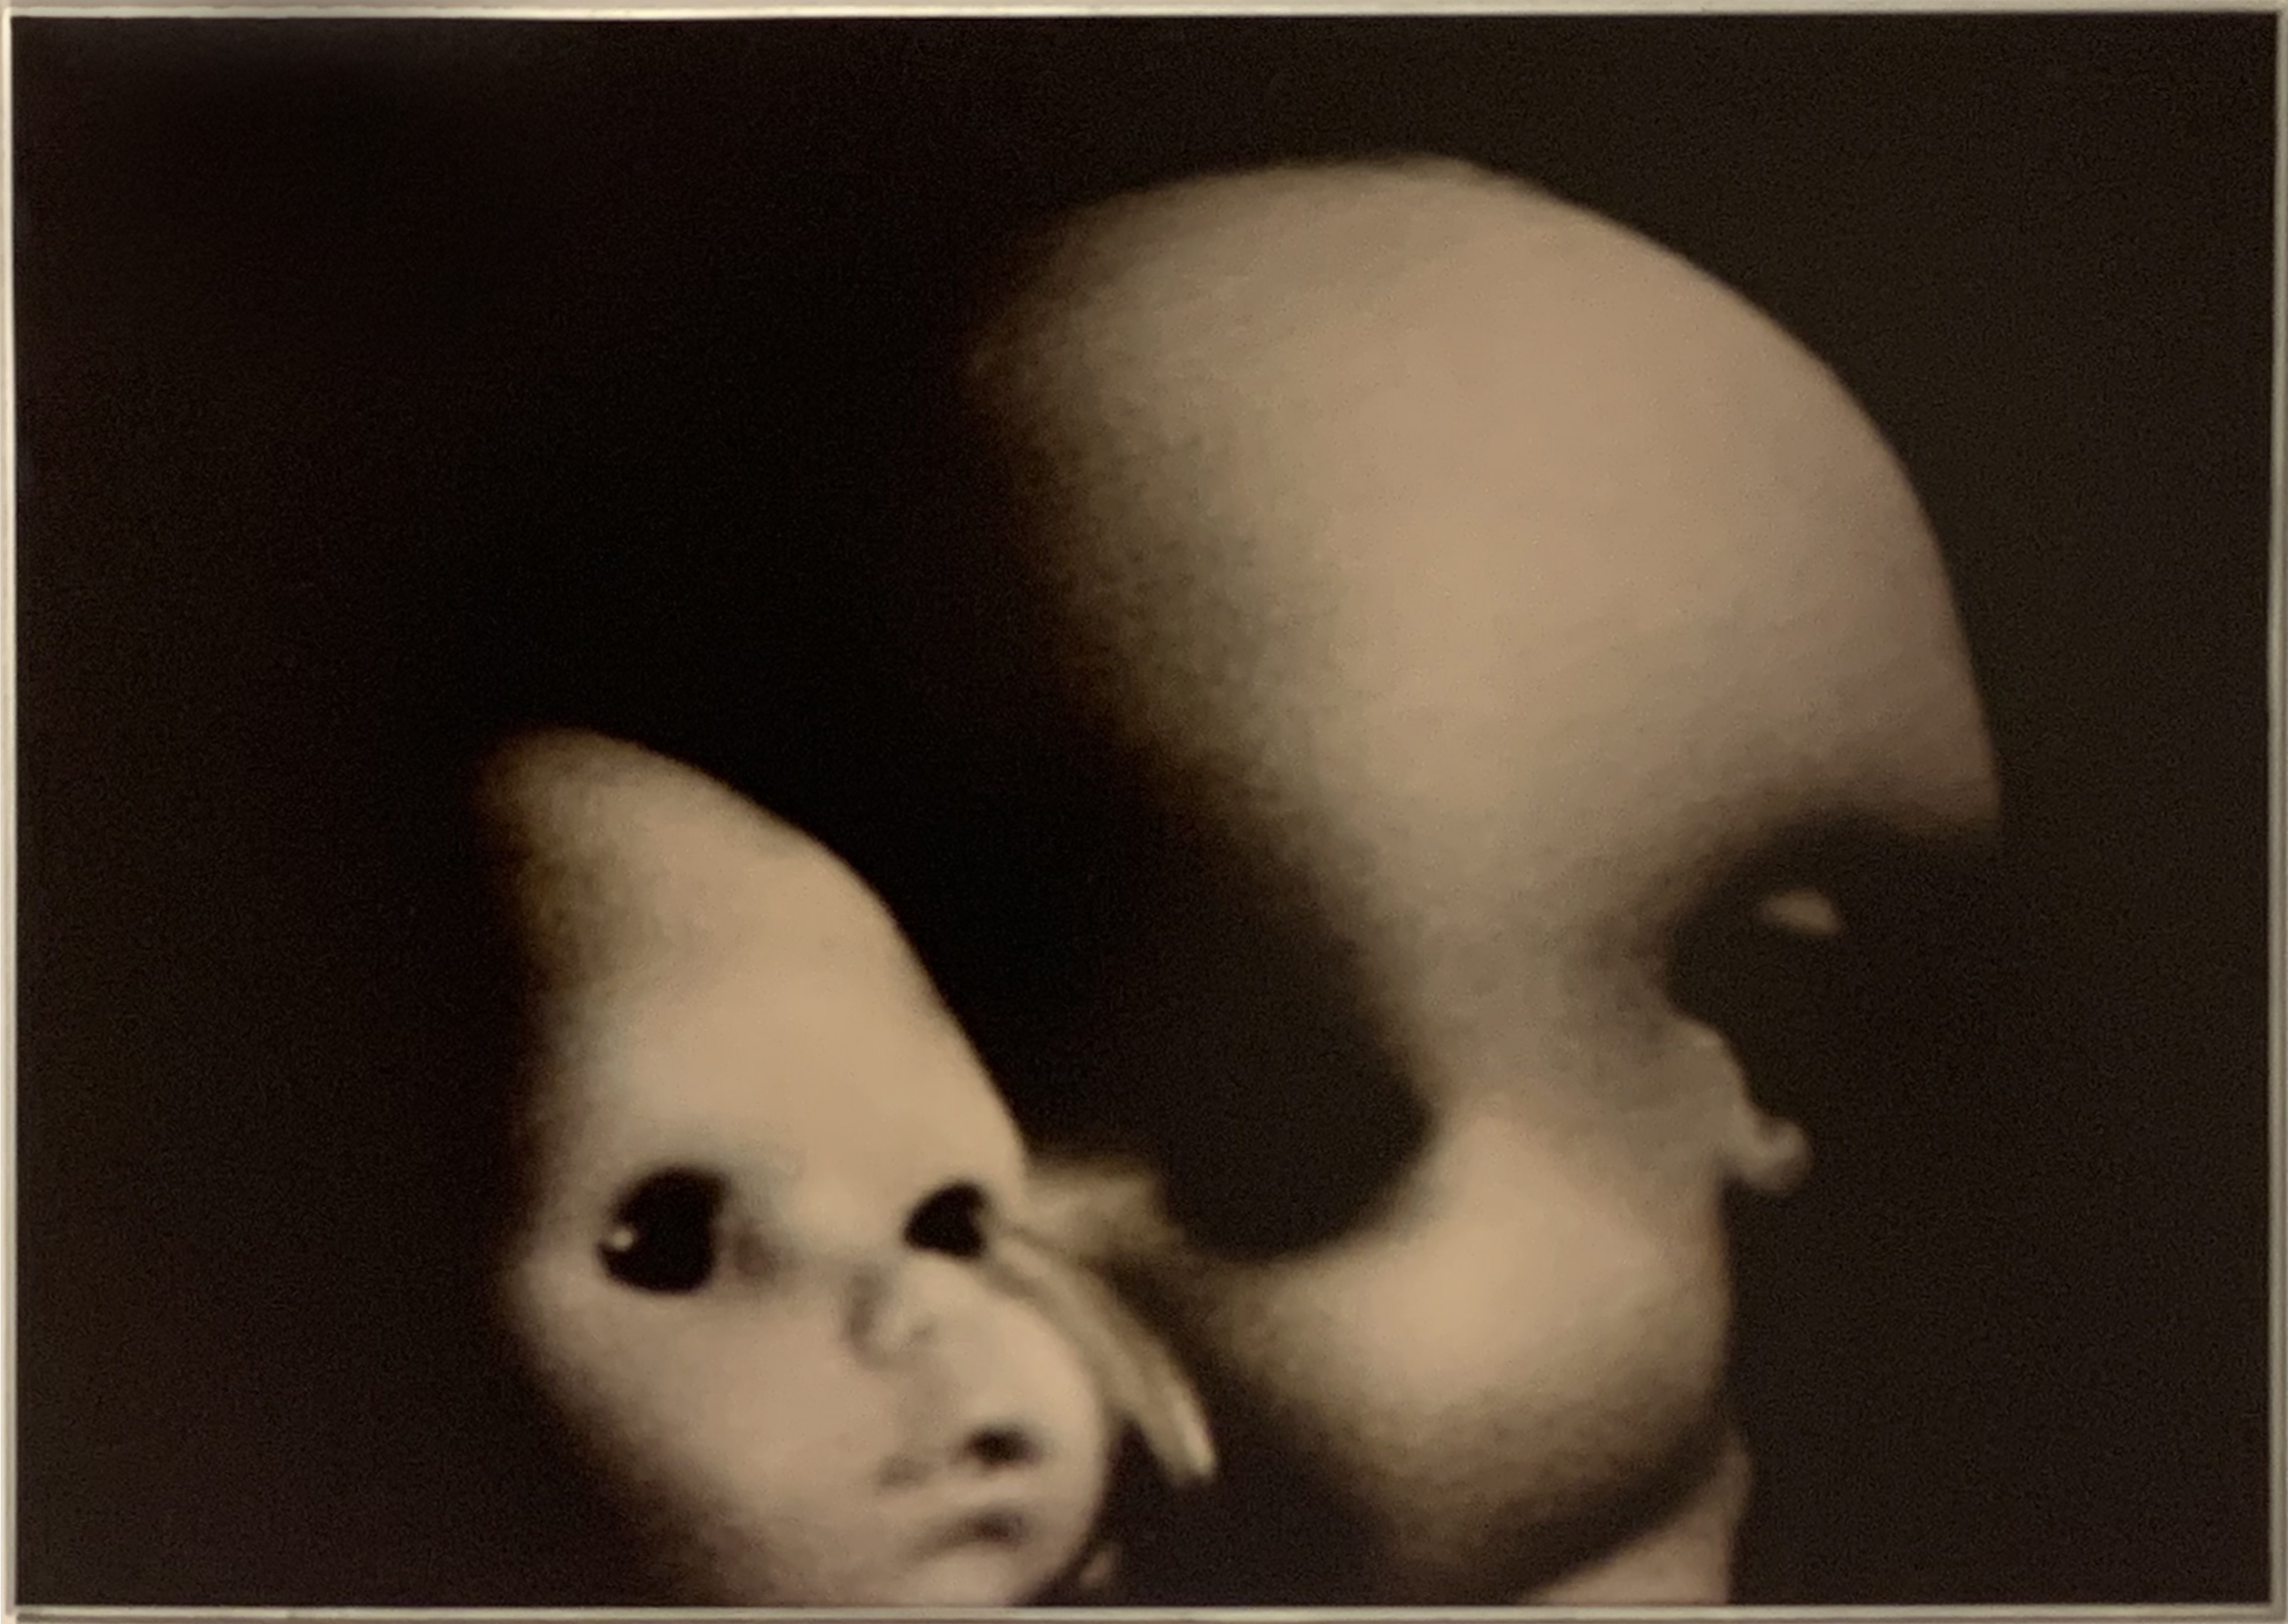 Marisa González. "Child_bites en el estudio. Clónicos". 1993-97. 60 x 84 cm.